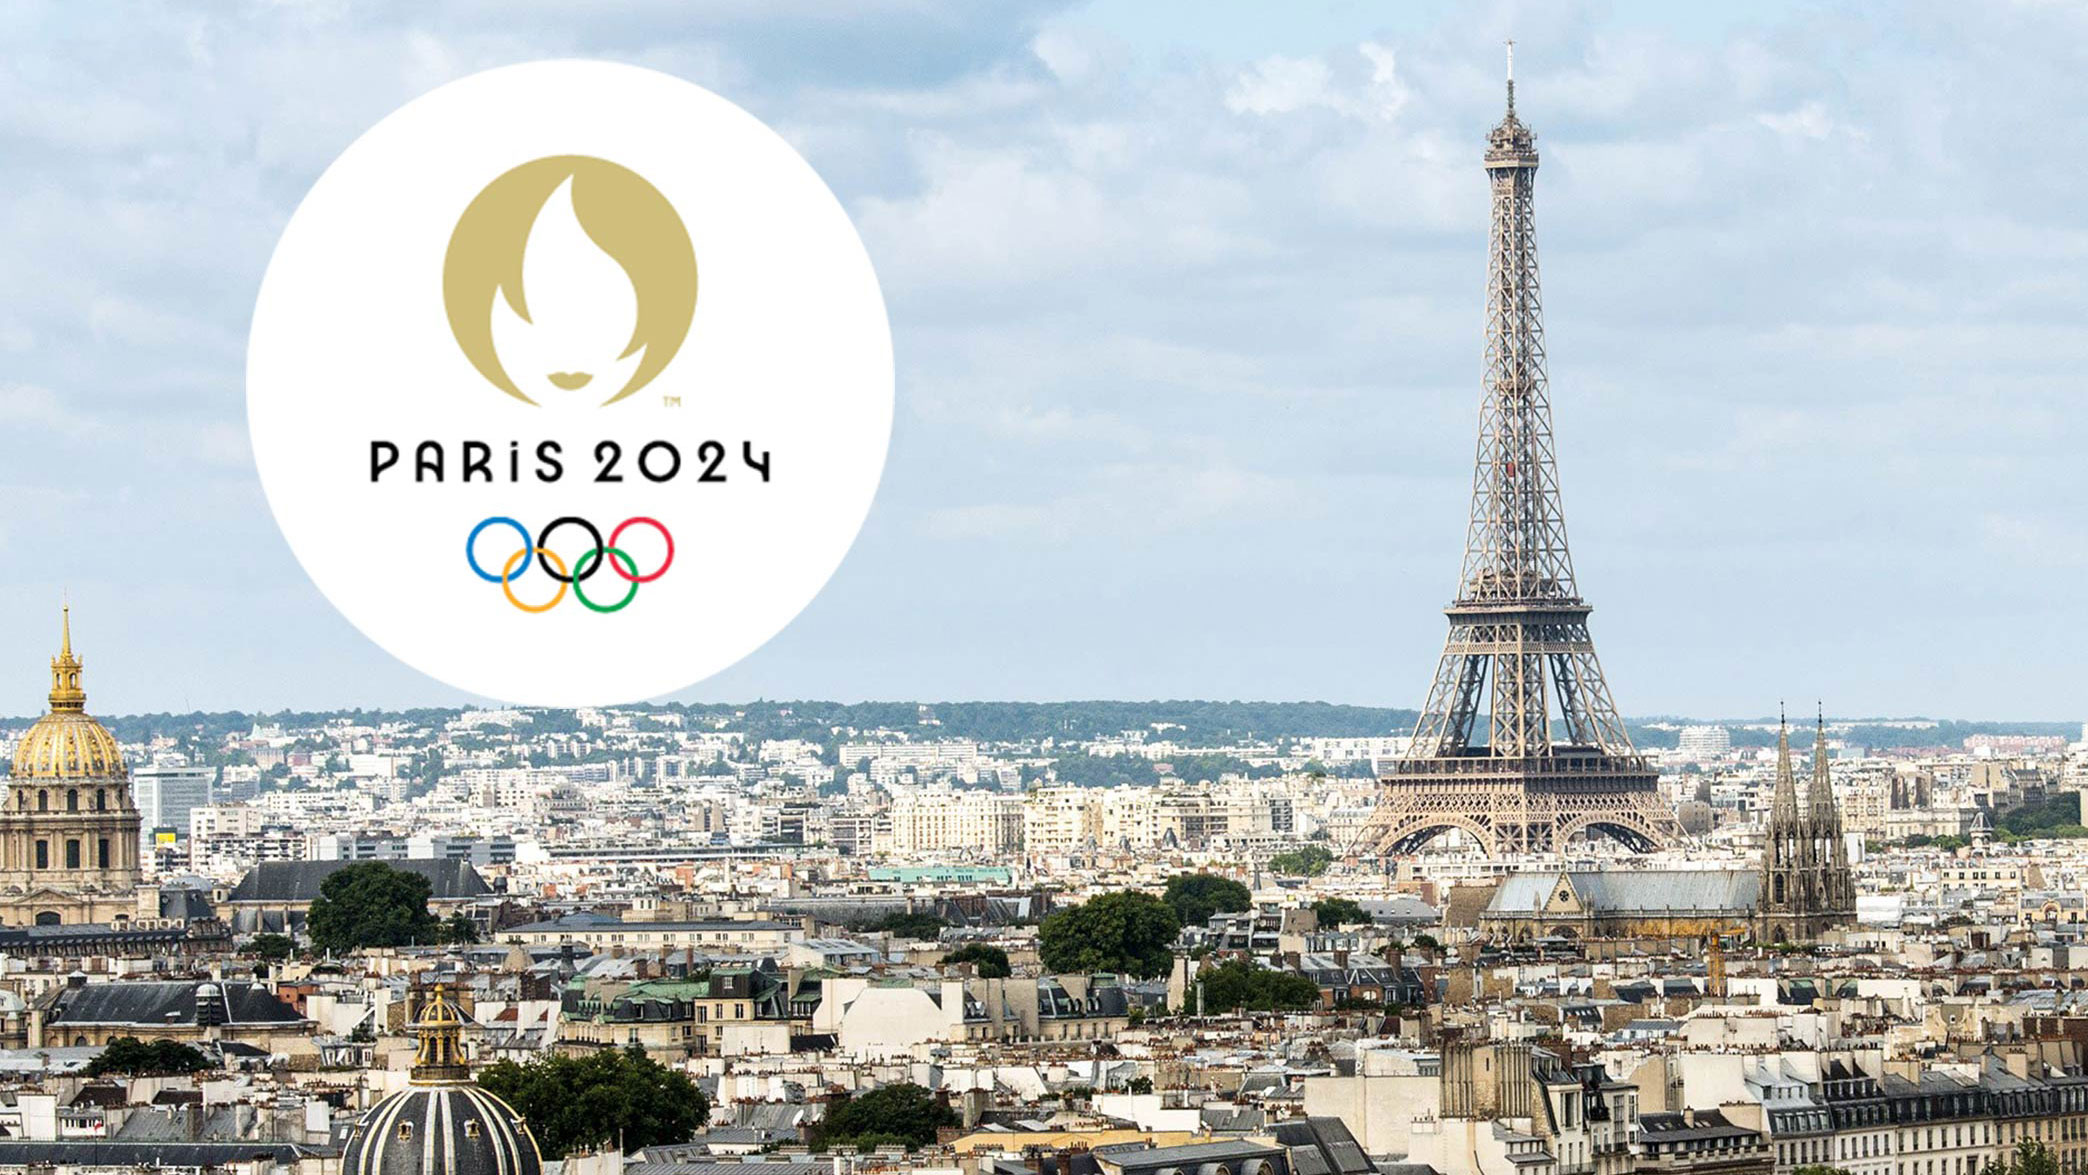 The Paris 2024 Olympics logo divides opinion